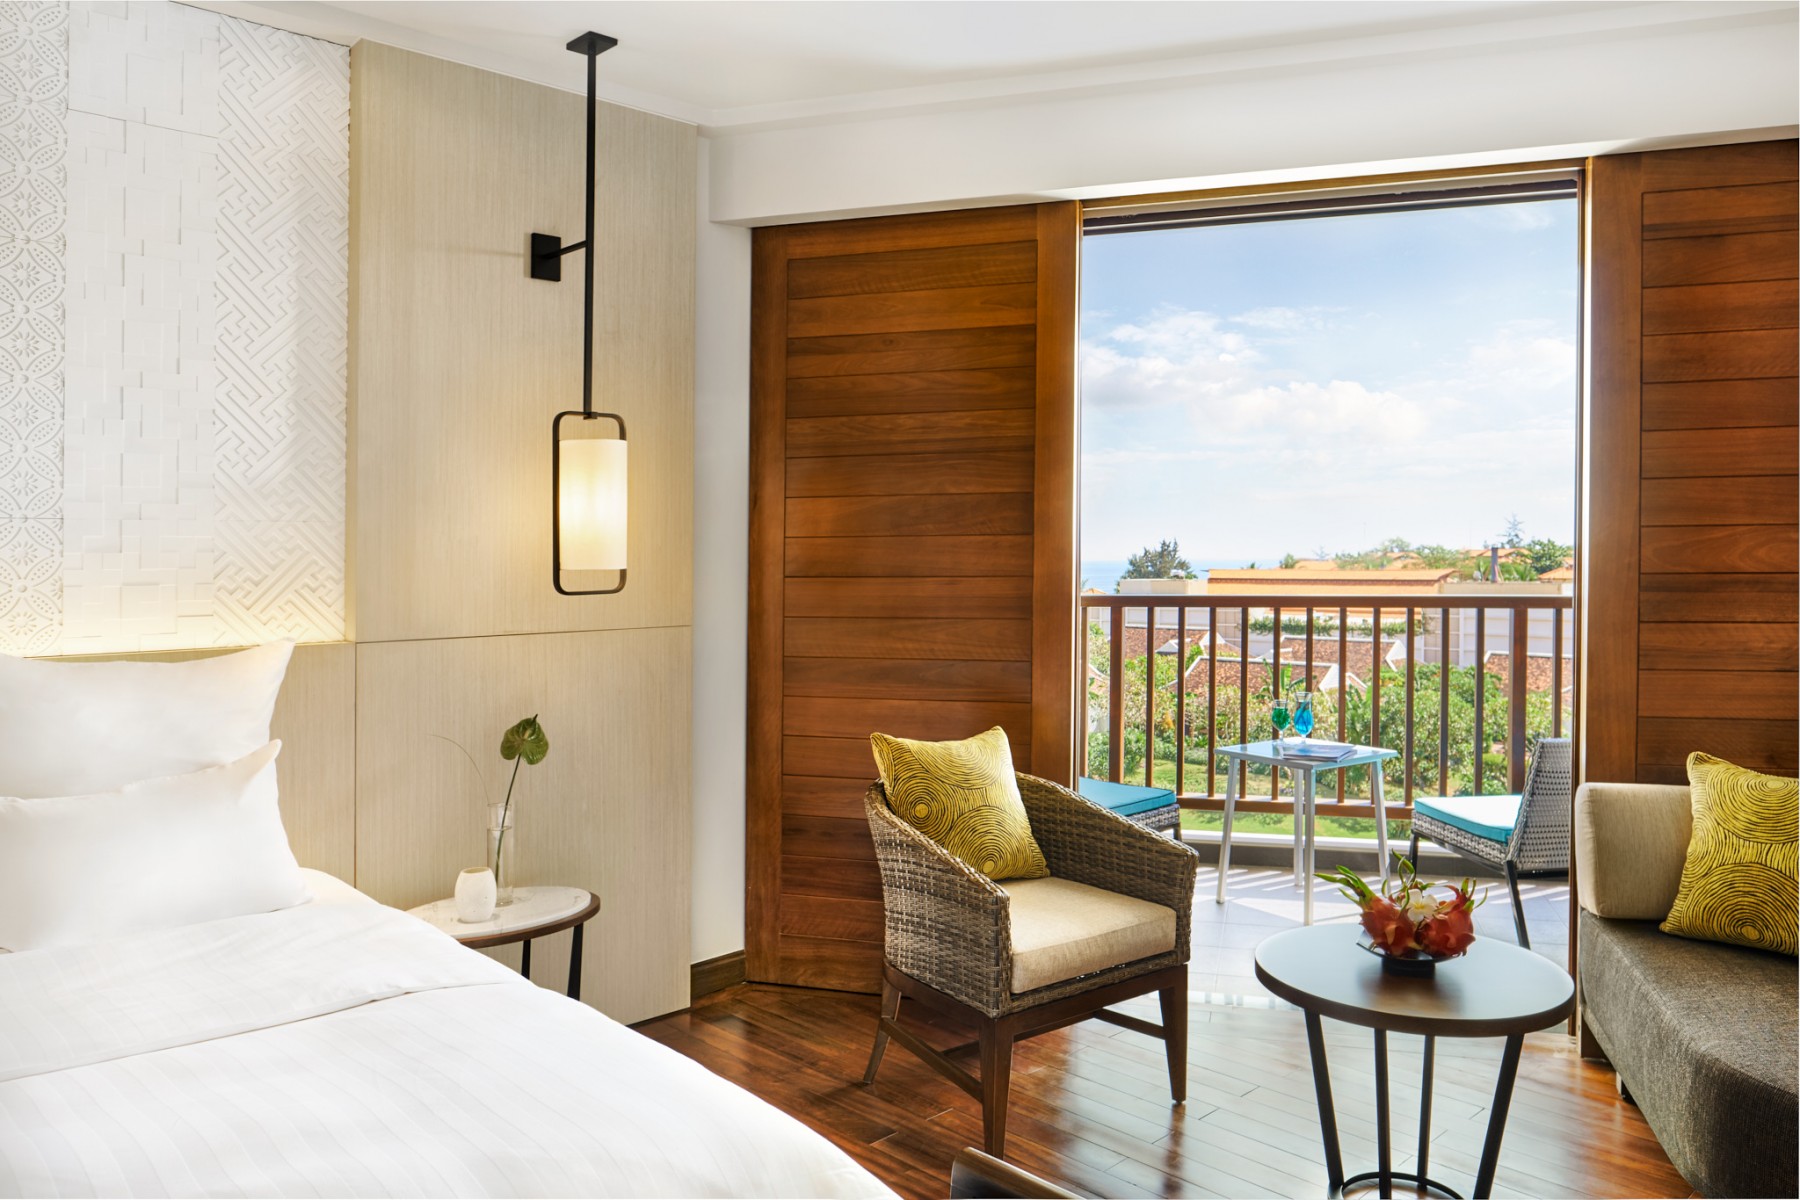 deluxe-king-bed-room-cottage-at-pullman-danang-beach-resort-vietnam-5-star-hotel-room.jpg